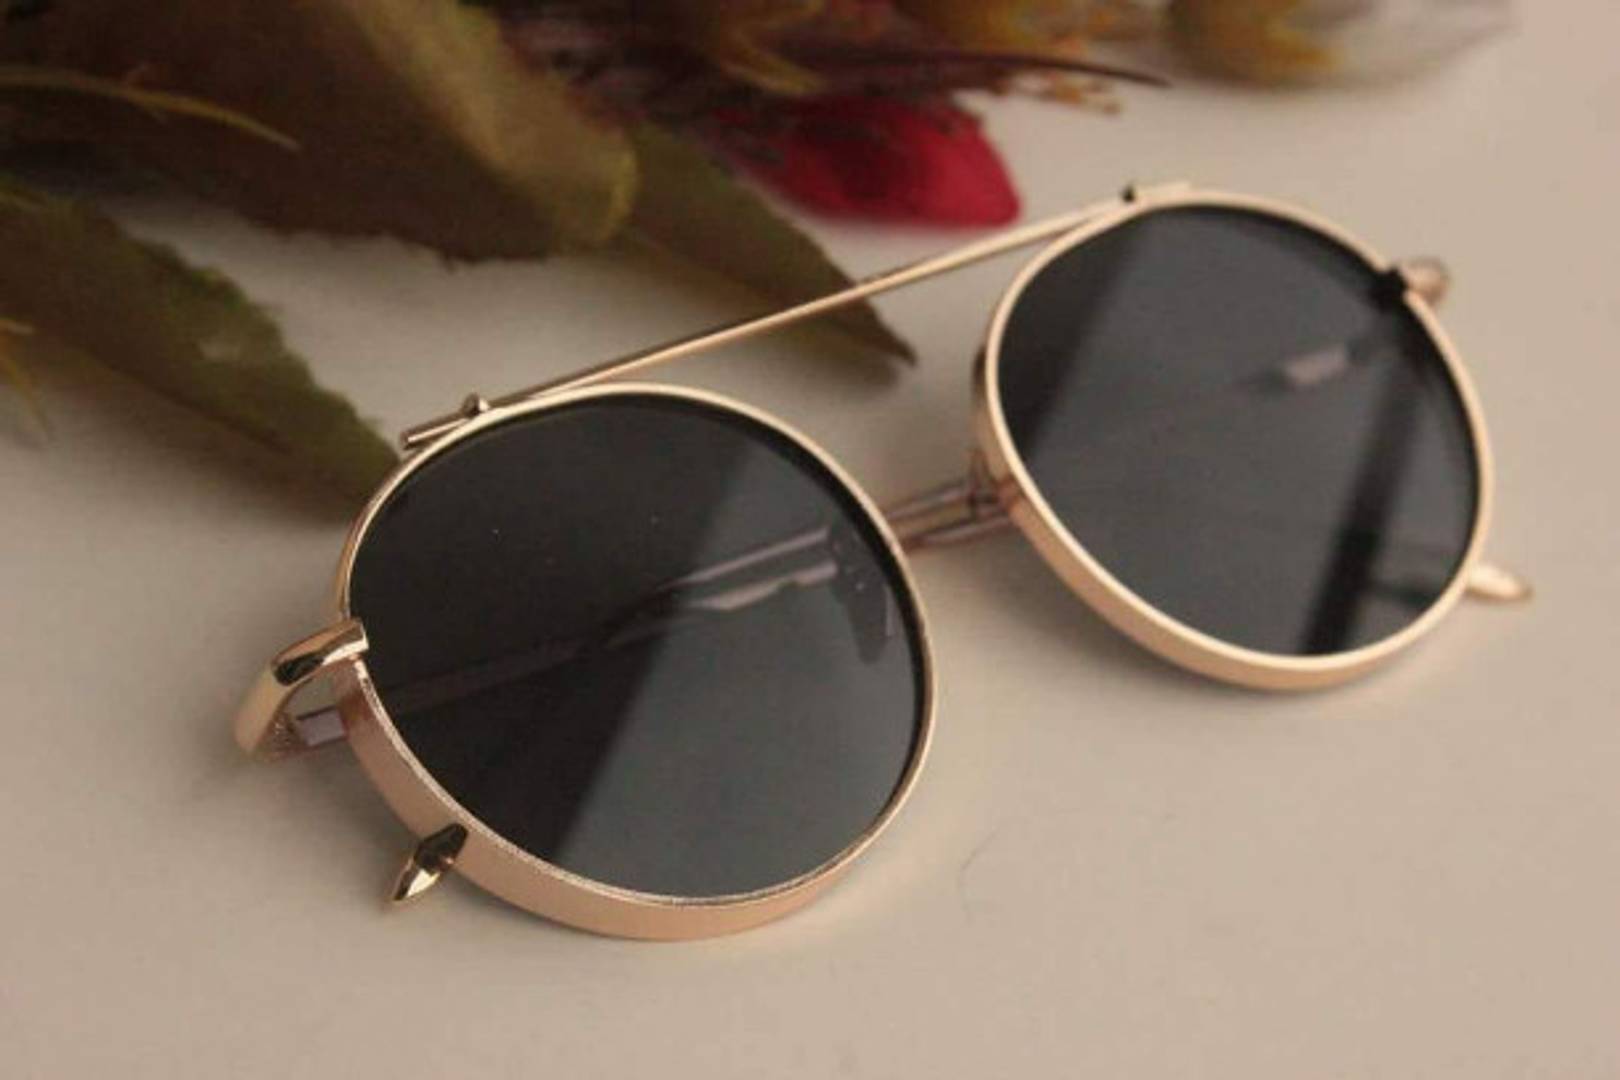 New Black Candy Lens Sunglasses Frame Gold